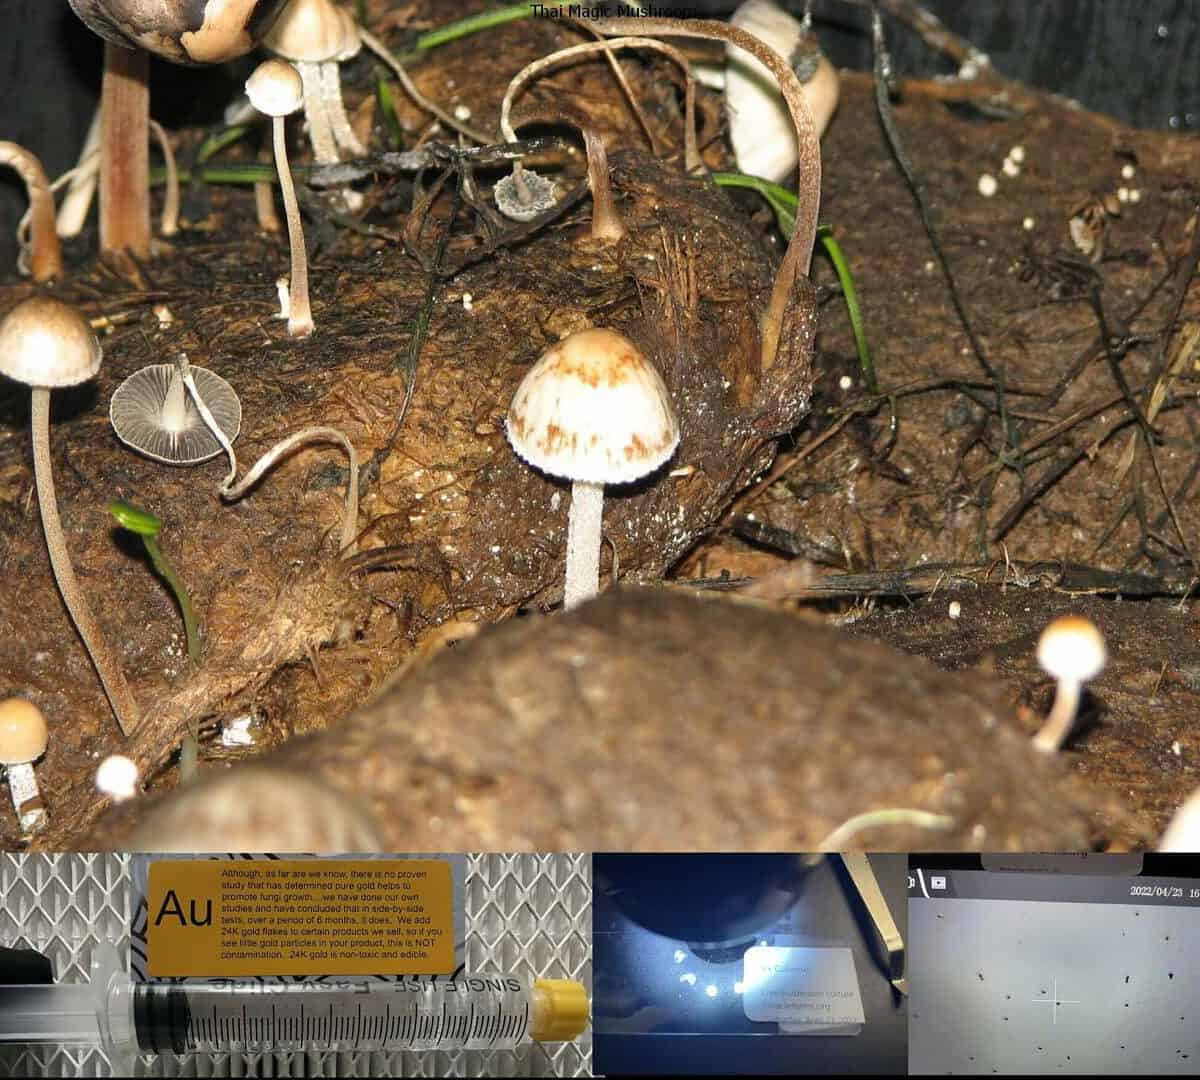 Thai Magic Mushroom spore syringe